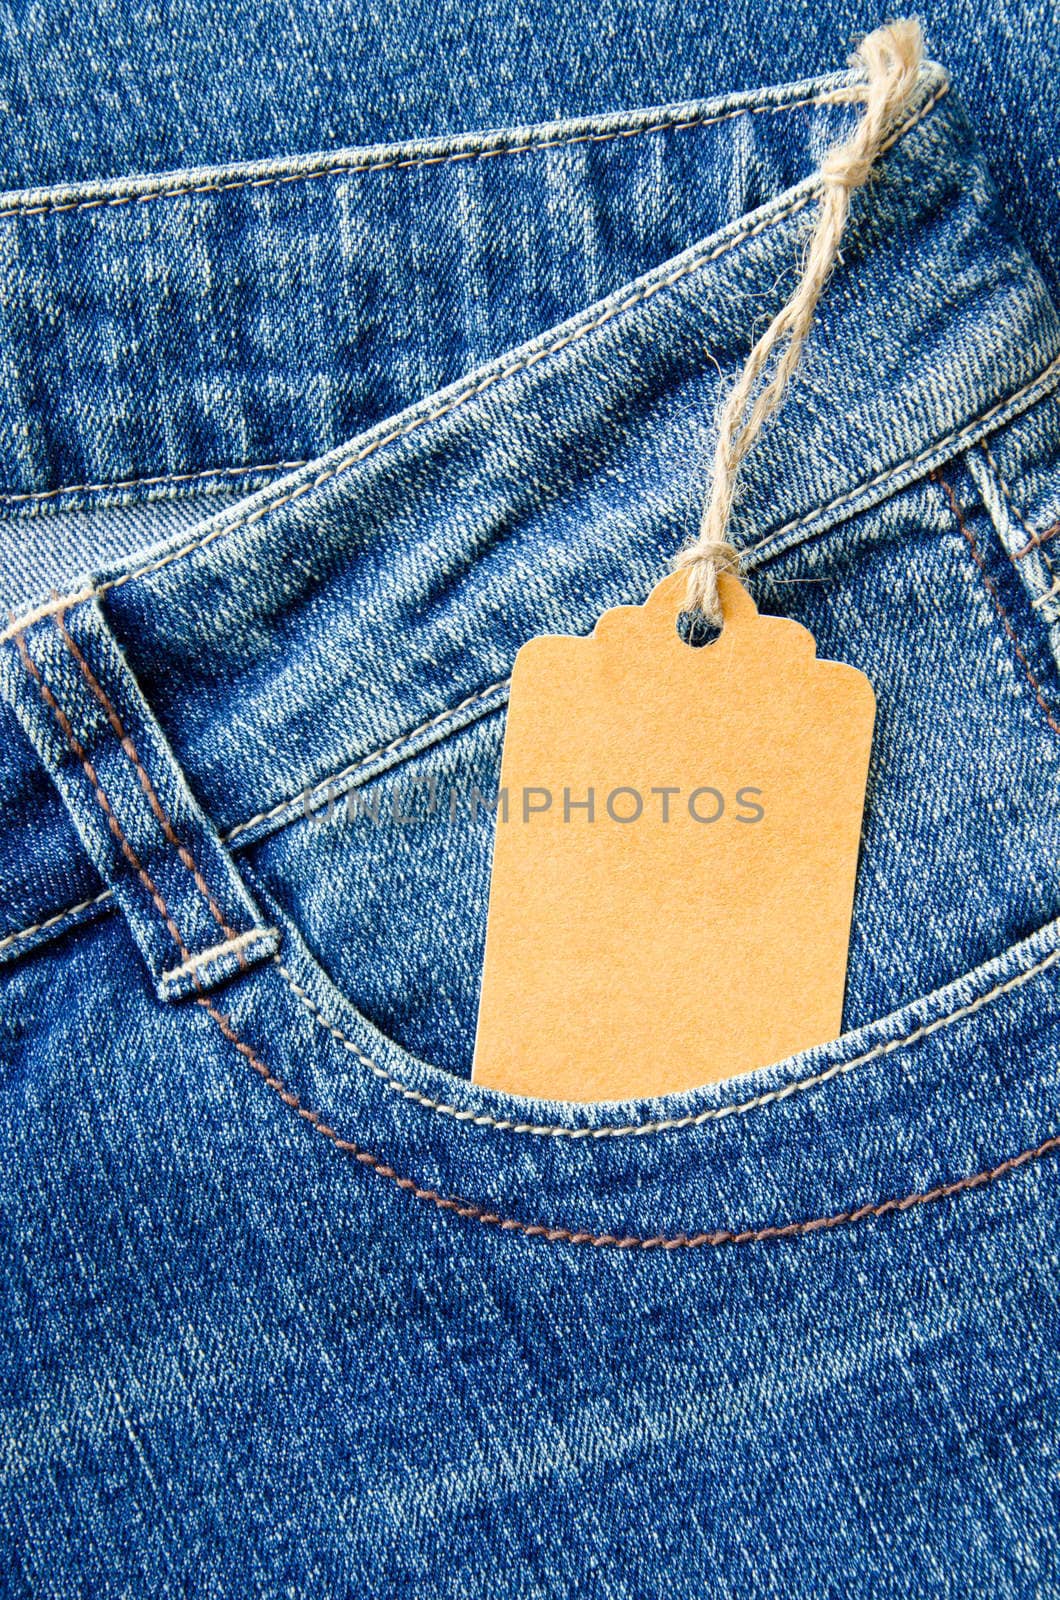 blue denim jeans with paper label